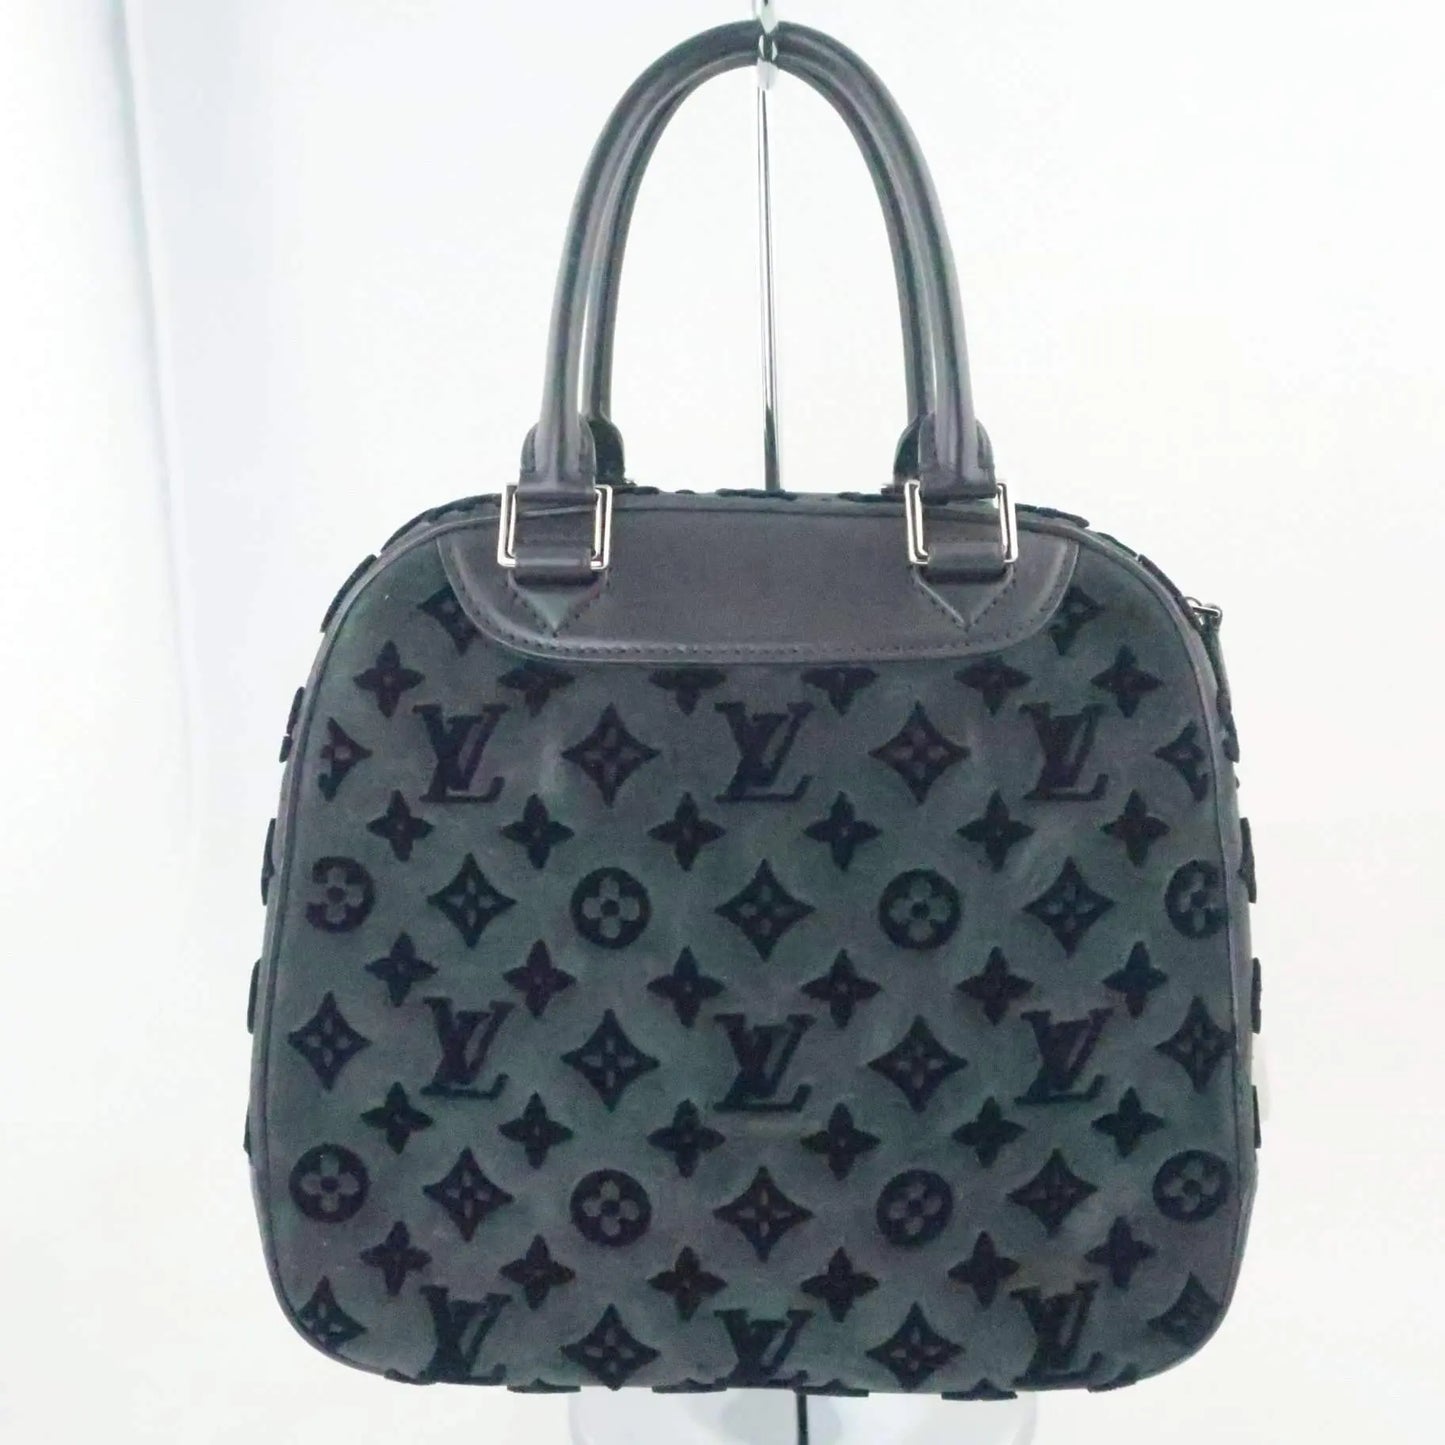 Limited Edition Louis Vuitton Rouge Monogram Tuffetage Deauville Cube Bag